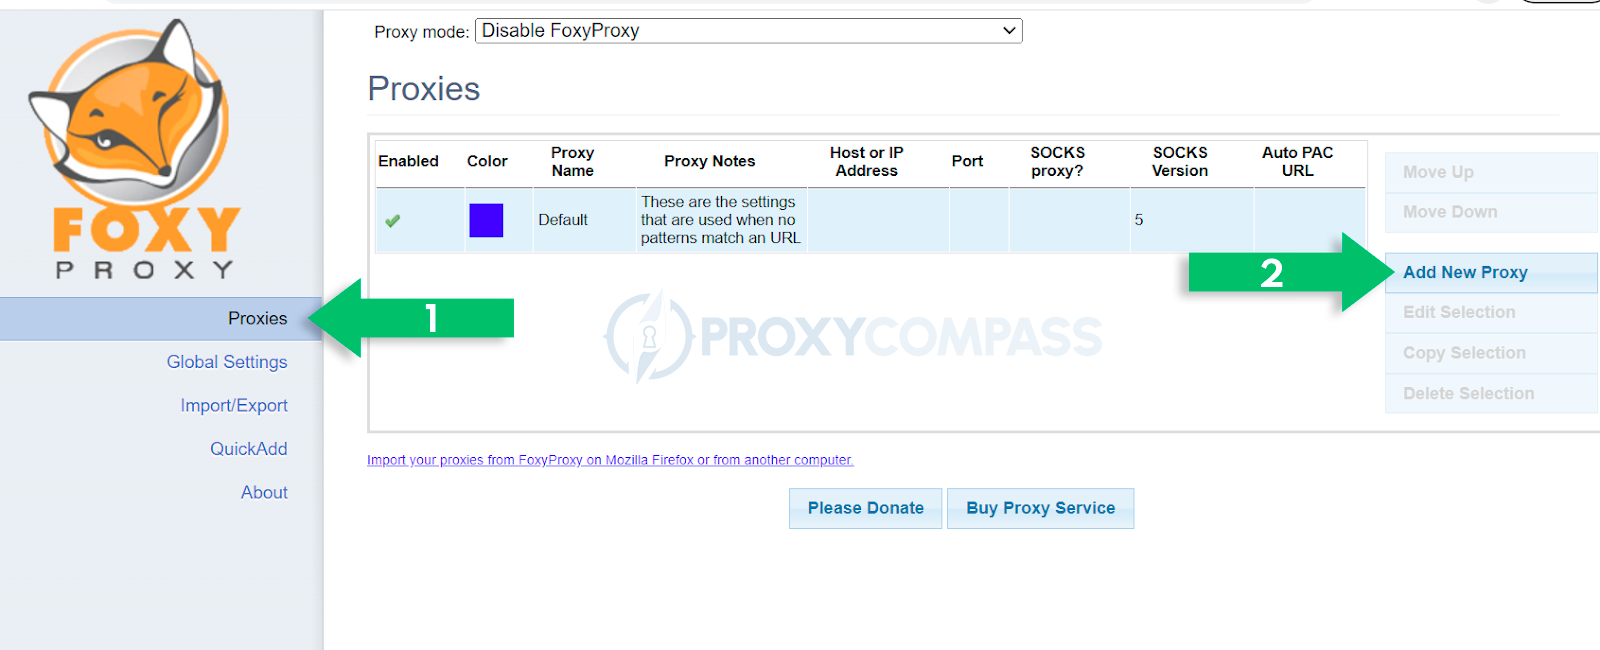 Go to adding a new proxy server